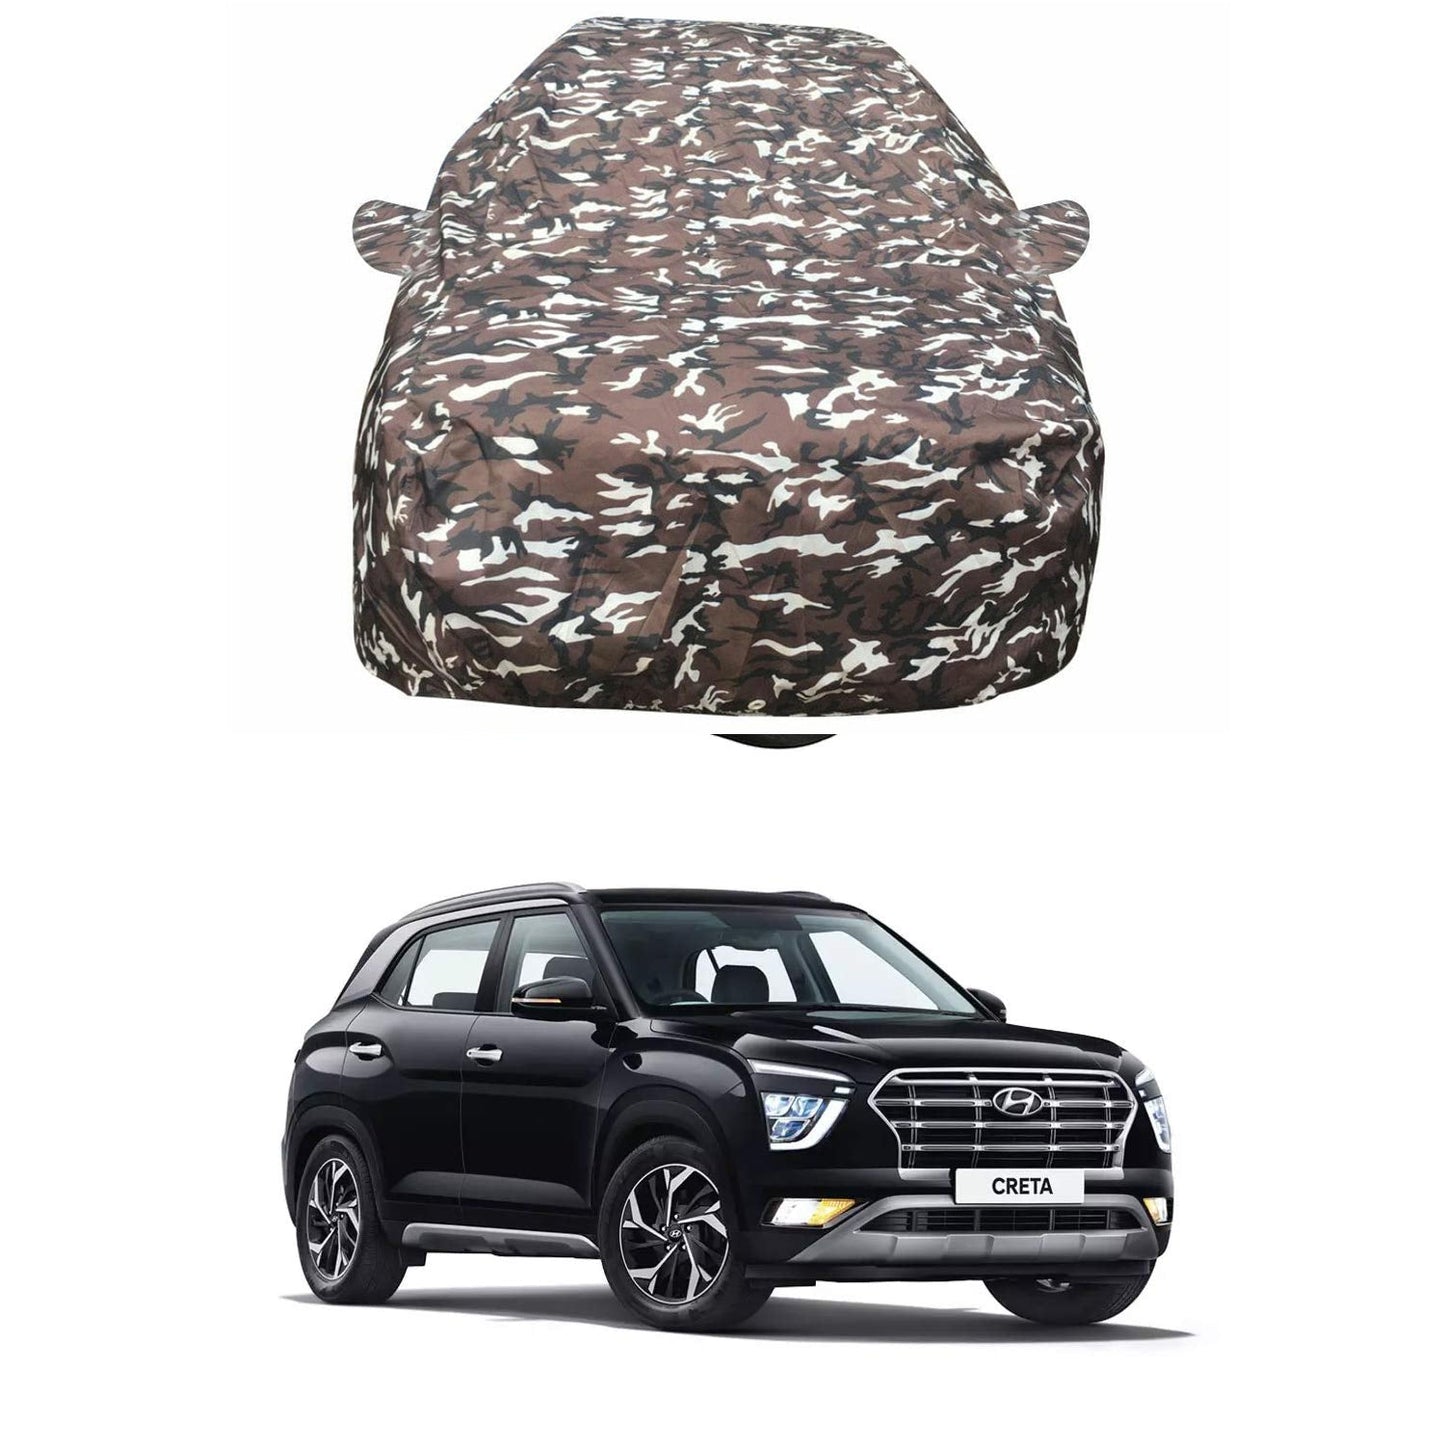 Oshotto Ranger Design Made of 100% Waterproof Fabric Car Body Cover with Mirror Pocket For Hyundai Creta 2020-2023